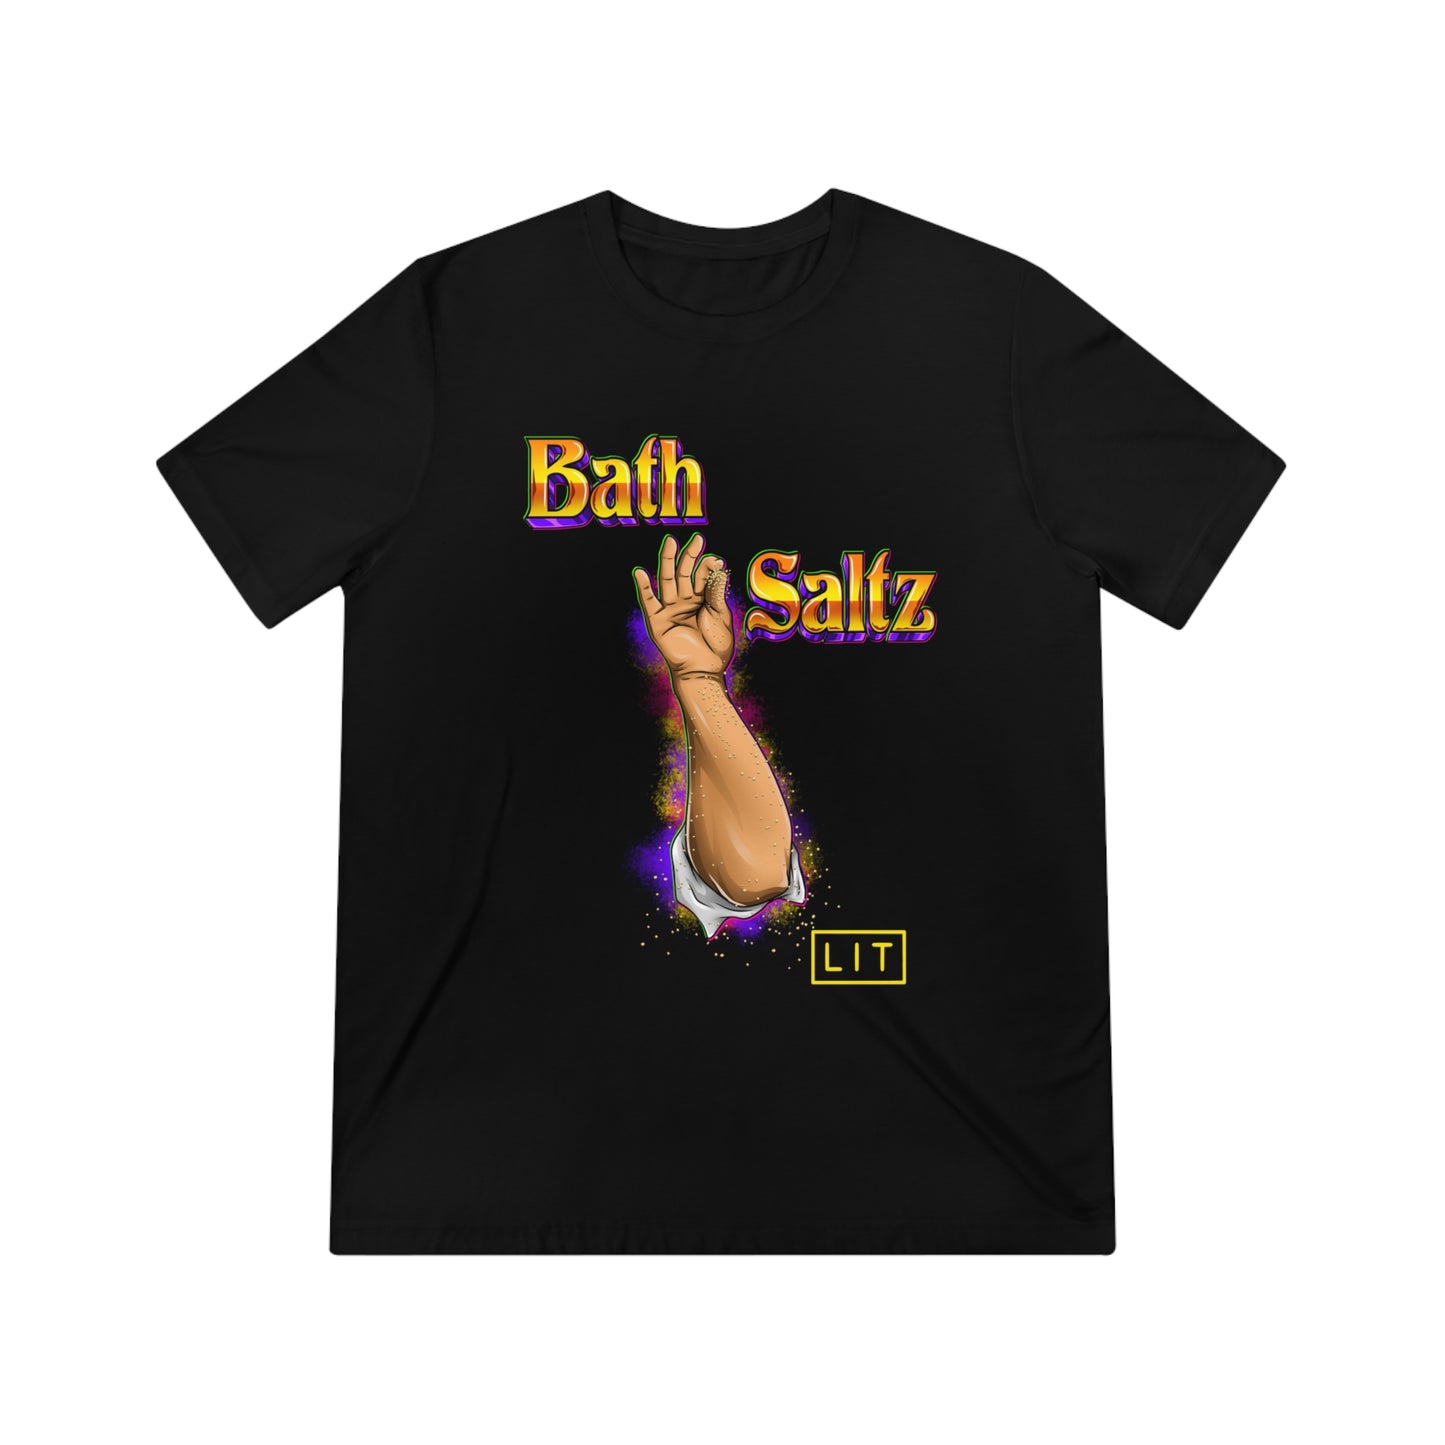 Bath Saltz - T-Shirt